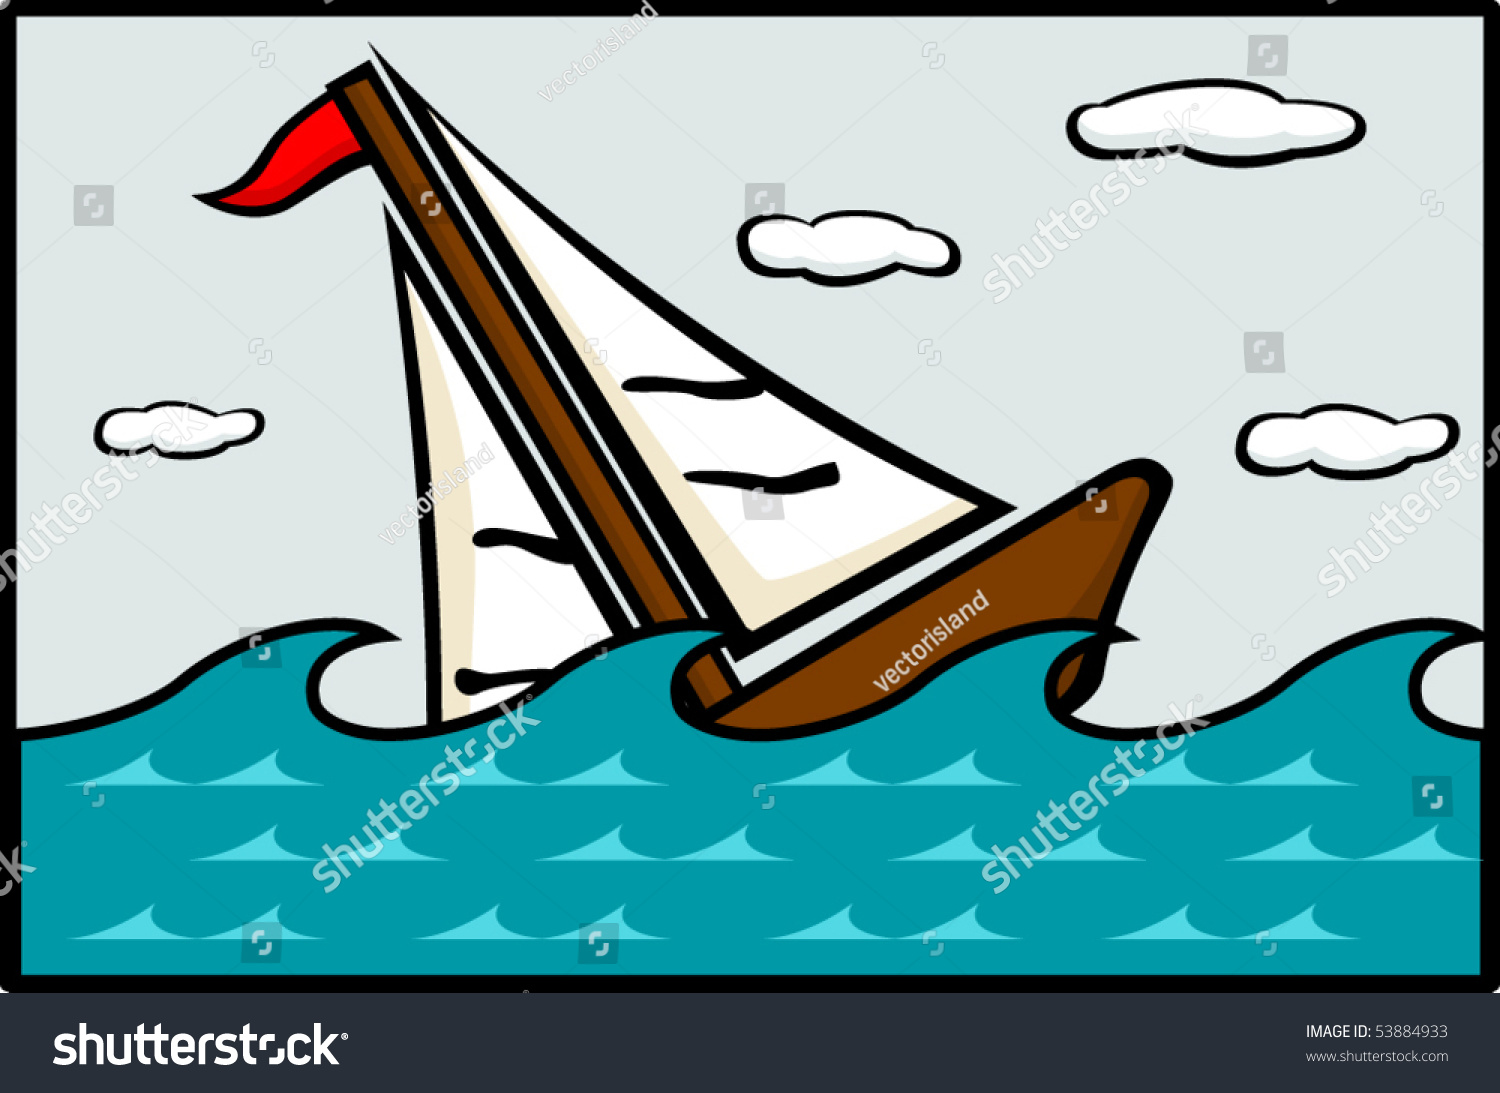 Sinking Ship Stock Vector 53884933 - Shutterstock